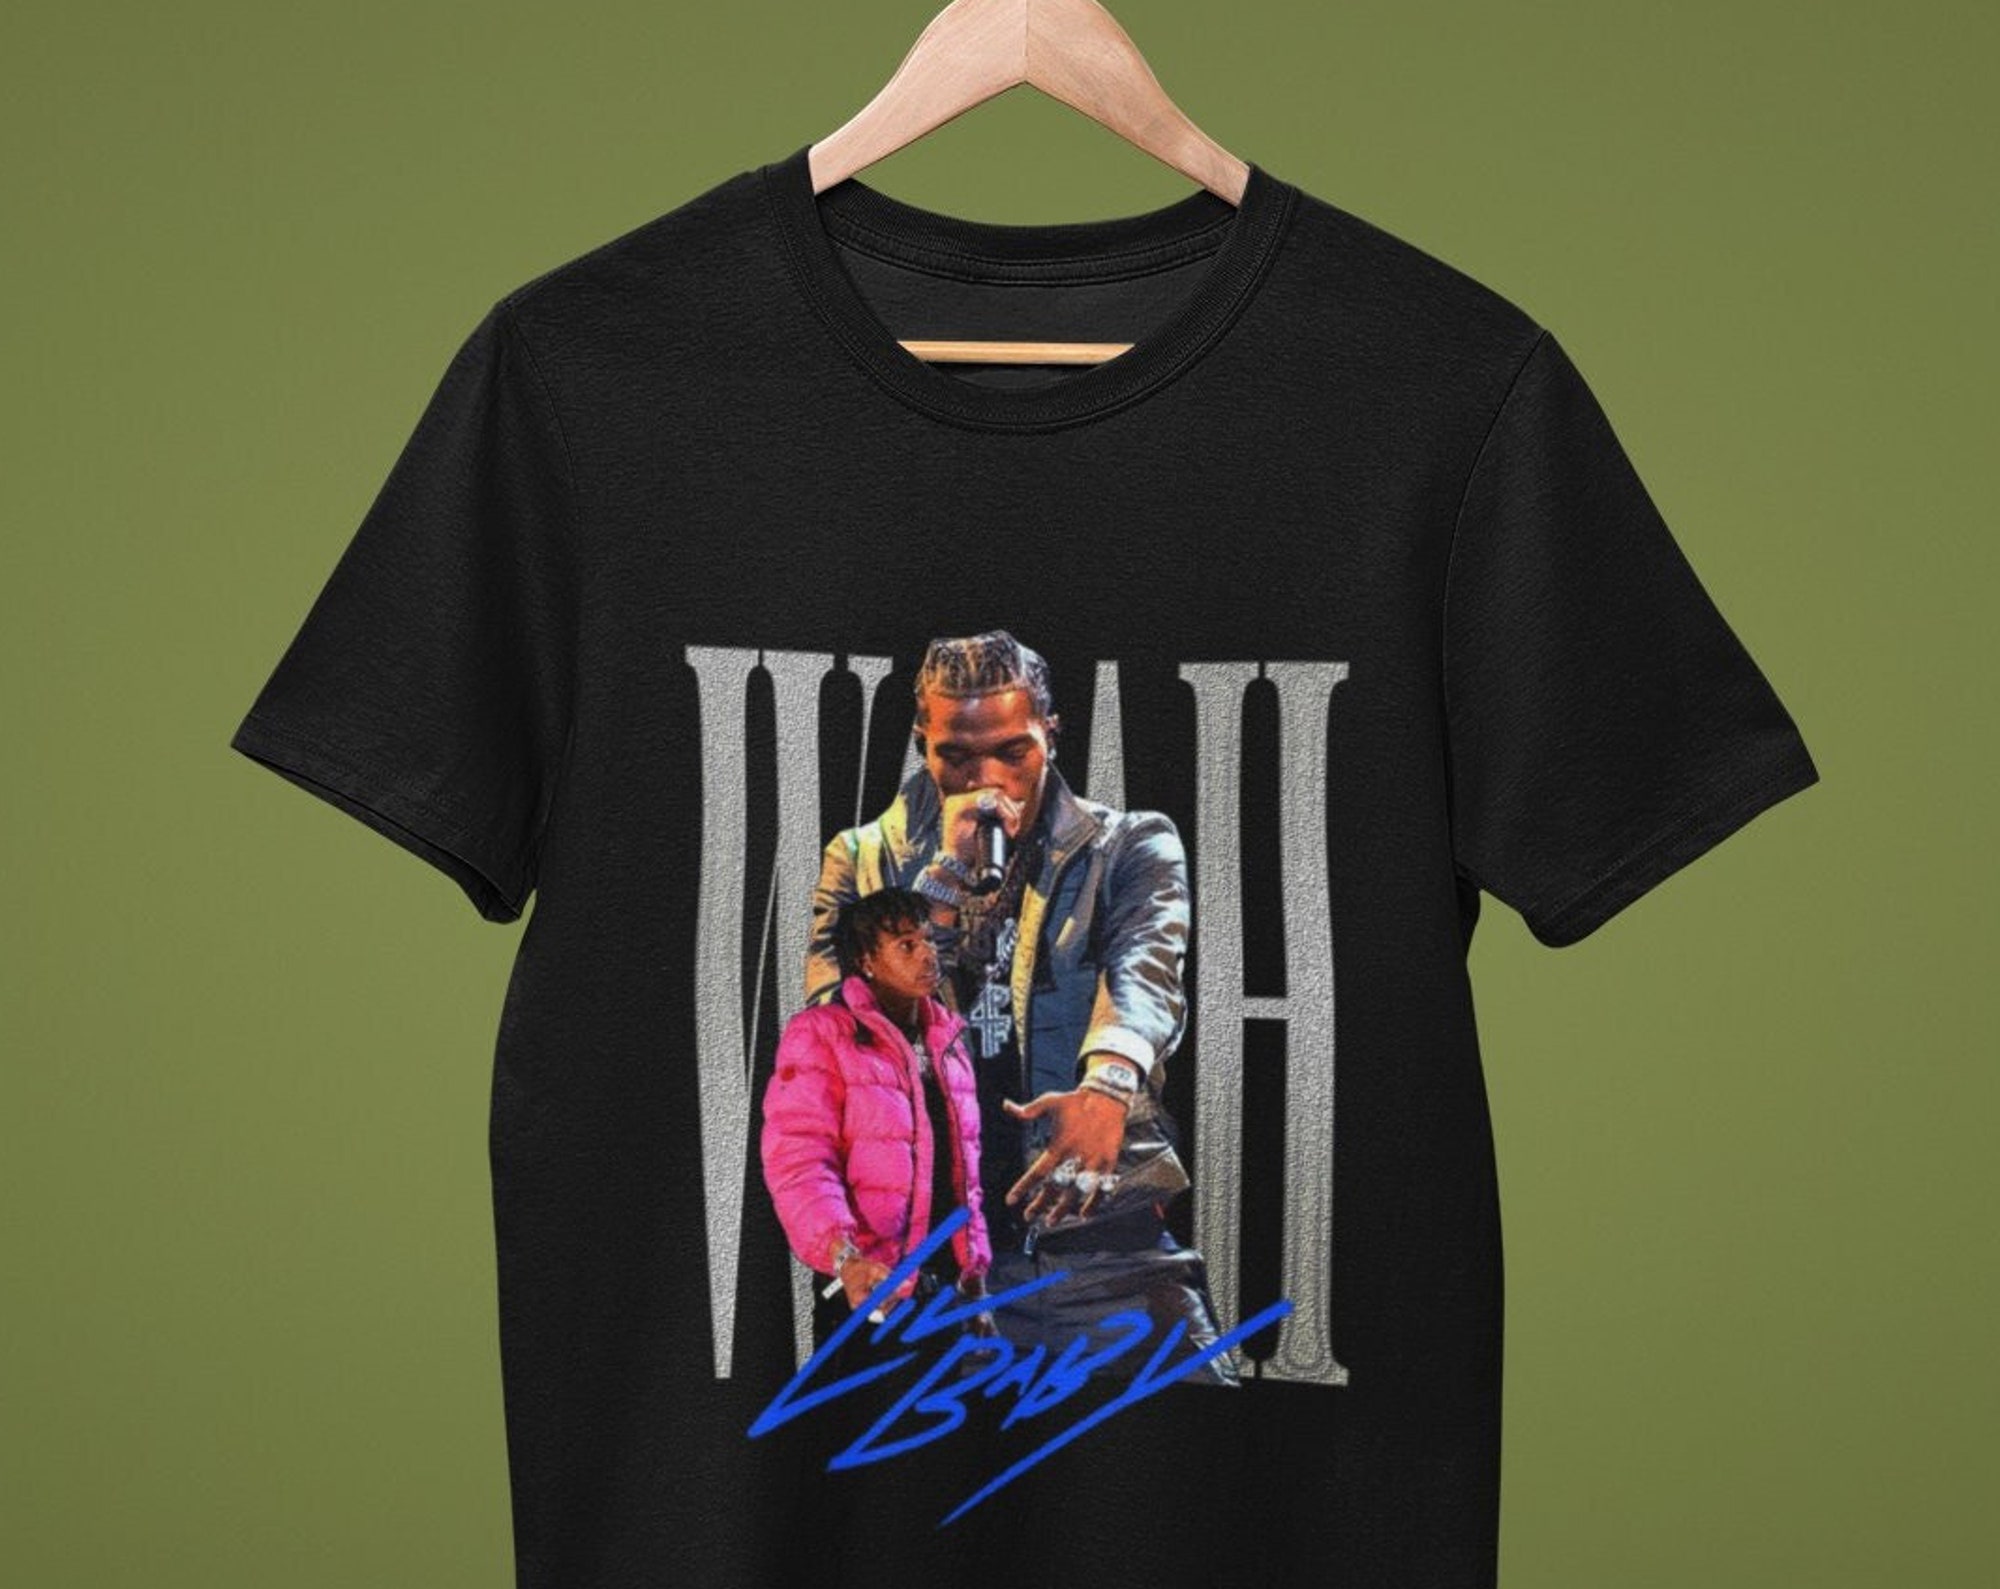 Discover Vintage Lil Baby Shirt-90s Retro Rapper Vintage Singer T-shirt